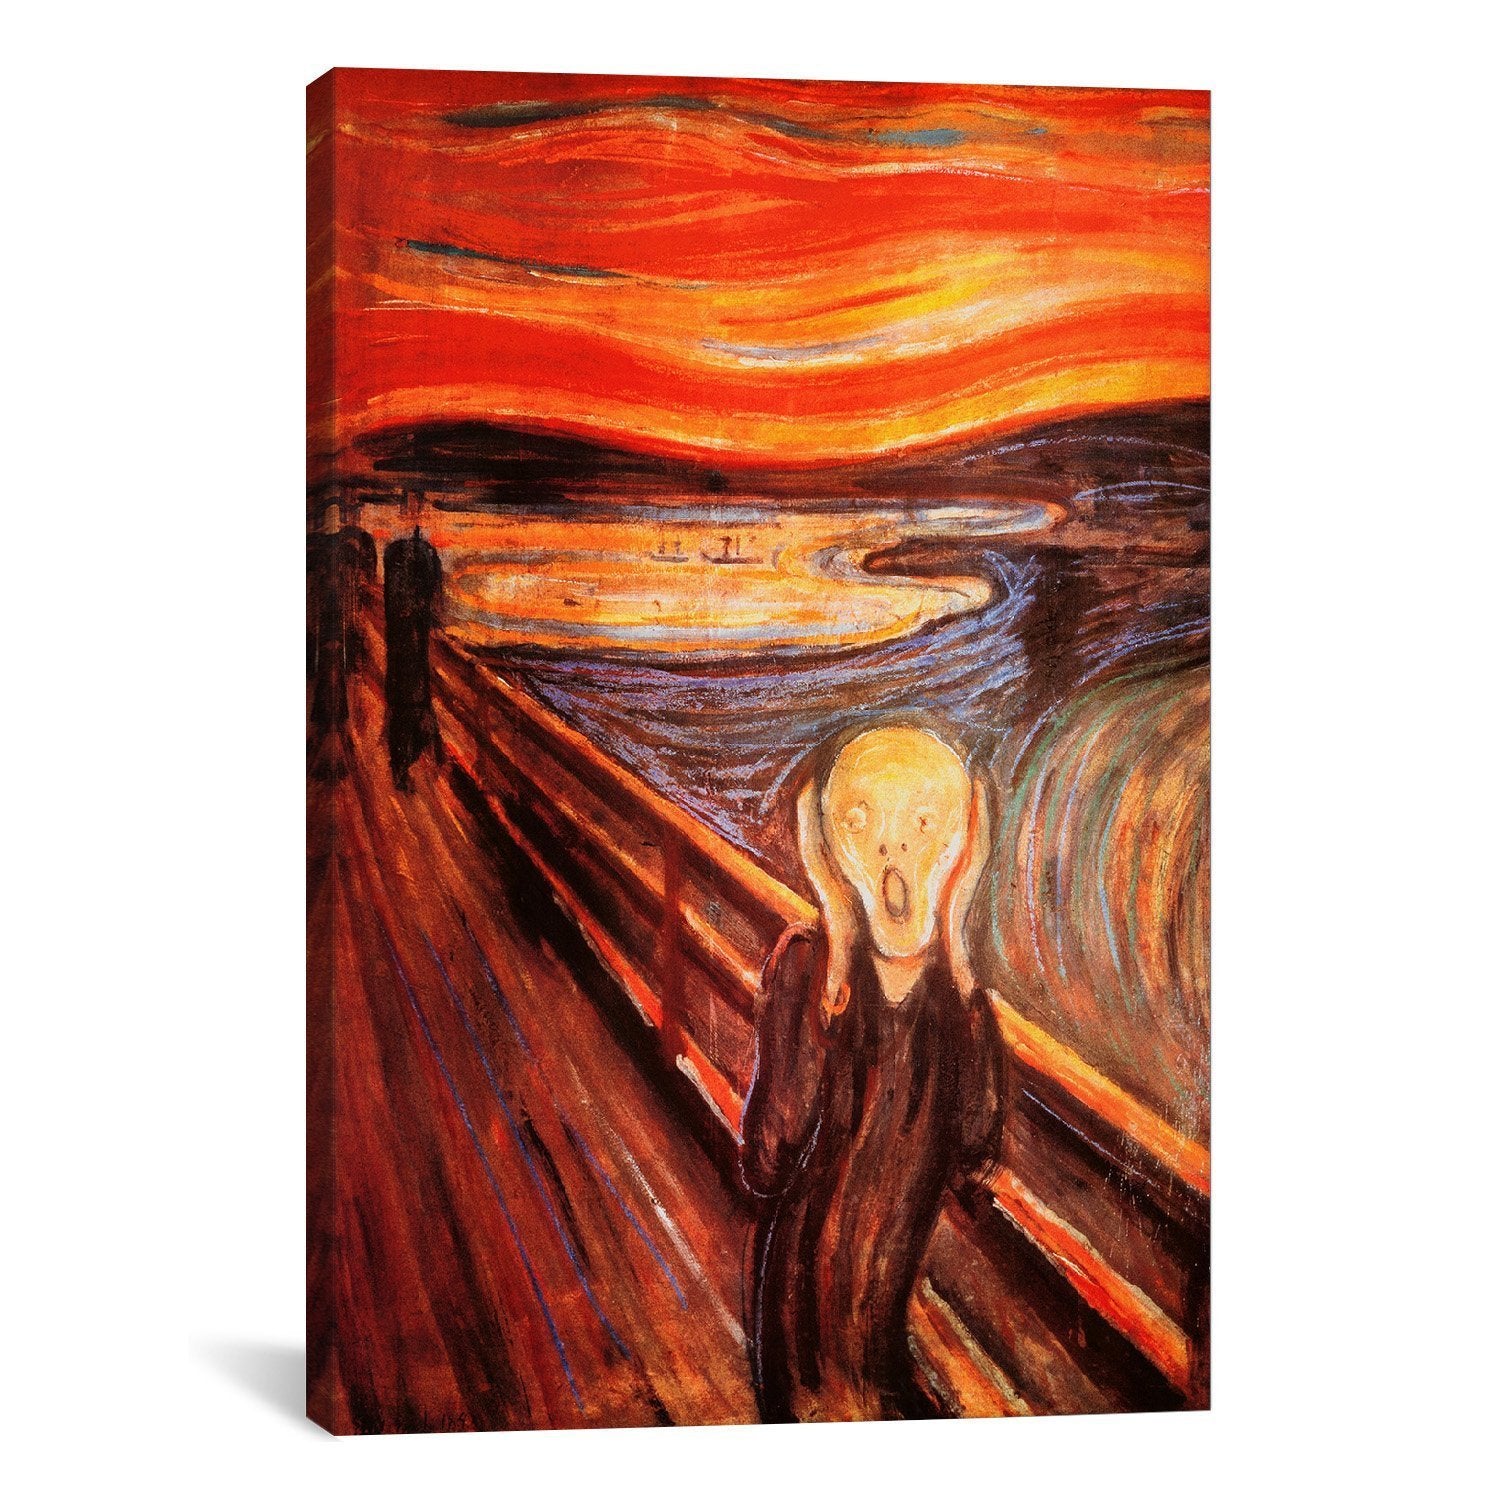 Edvard Munch The Scream Canvas Art Print Painting Reproduction